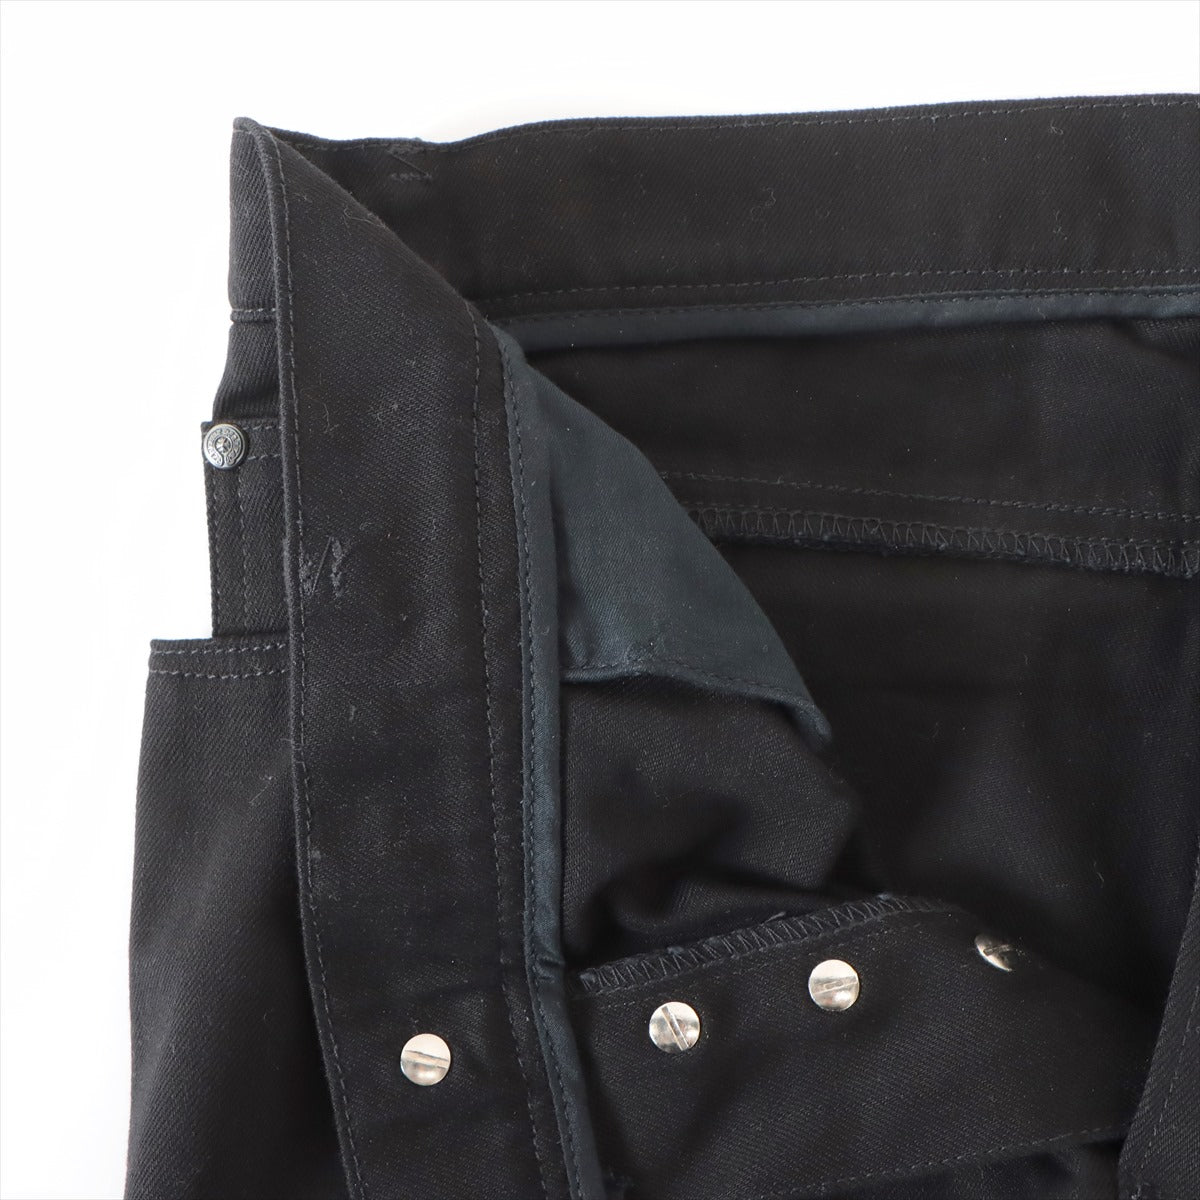 Chrome Hearts Flerknee Denim pants Cotton Black 38 old-fashioned